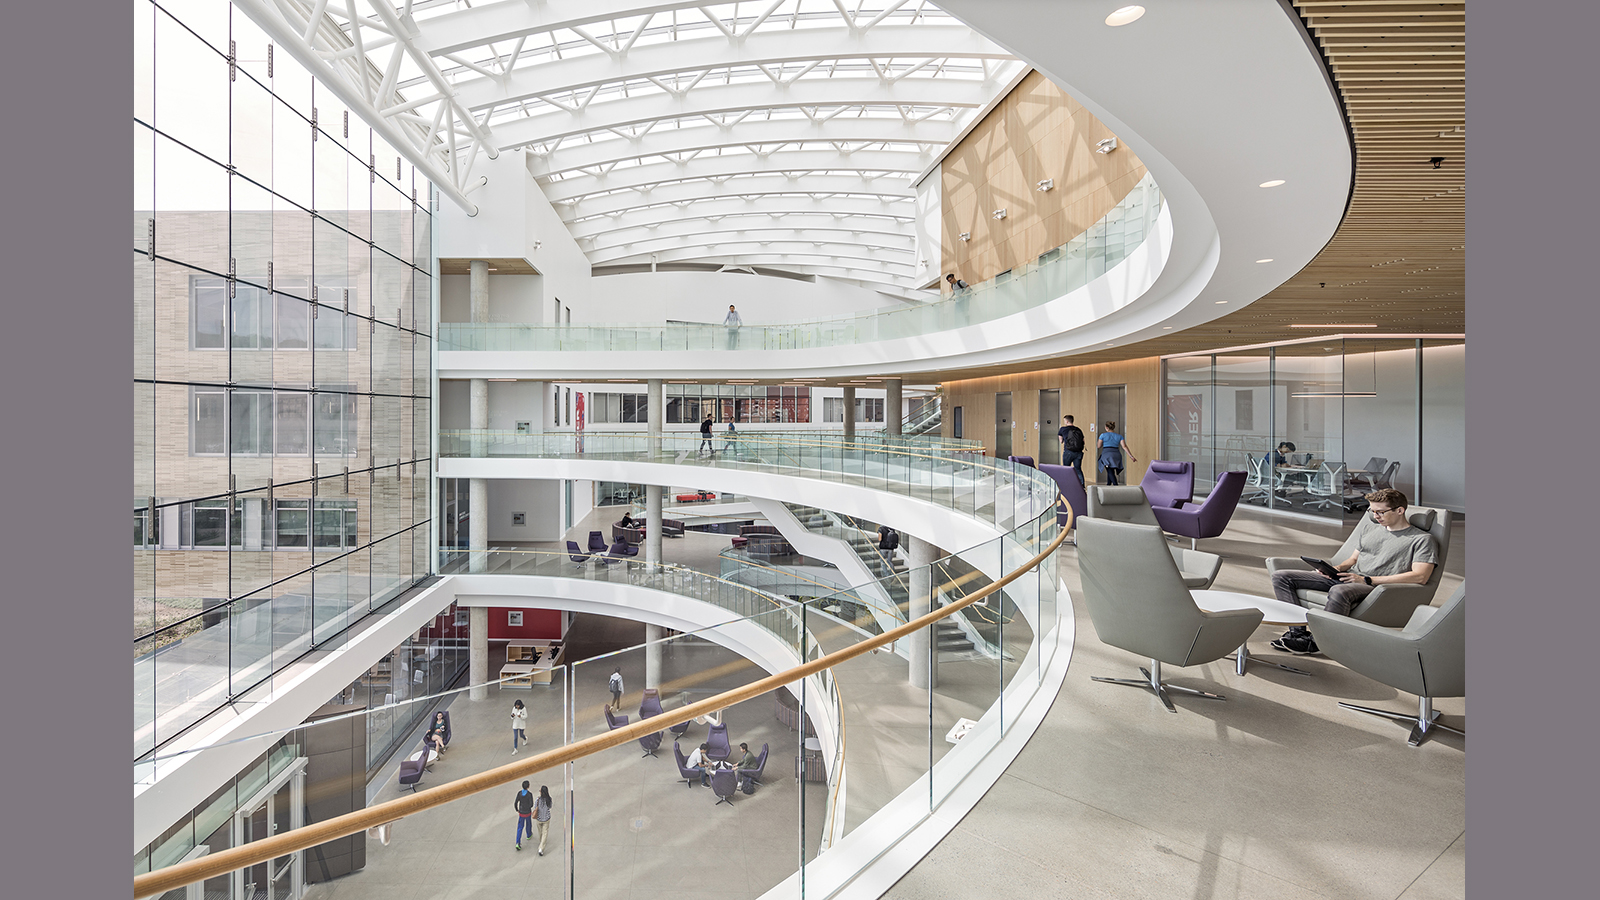 Tepper School of Business at Carnegie Mellon University, thirds floor view of atrium